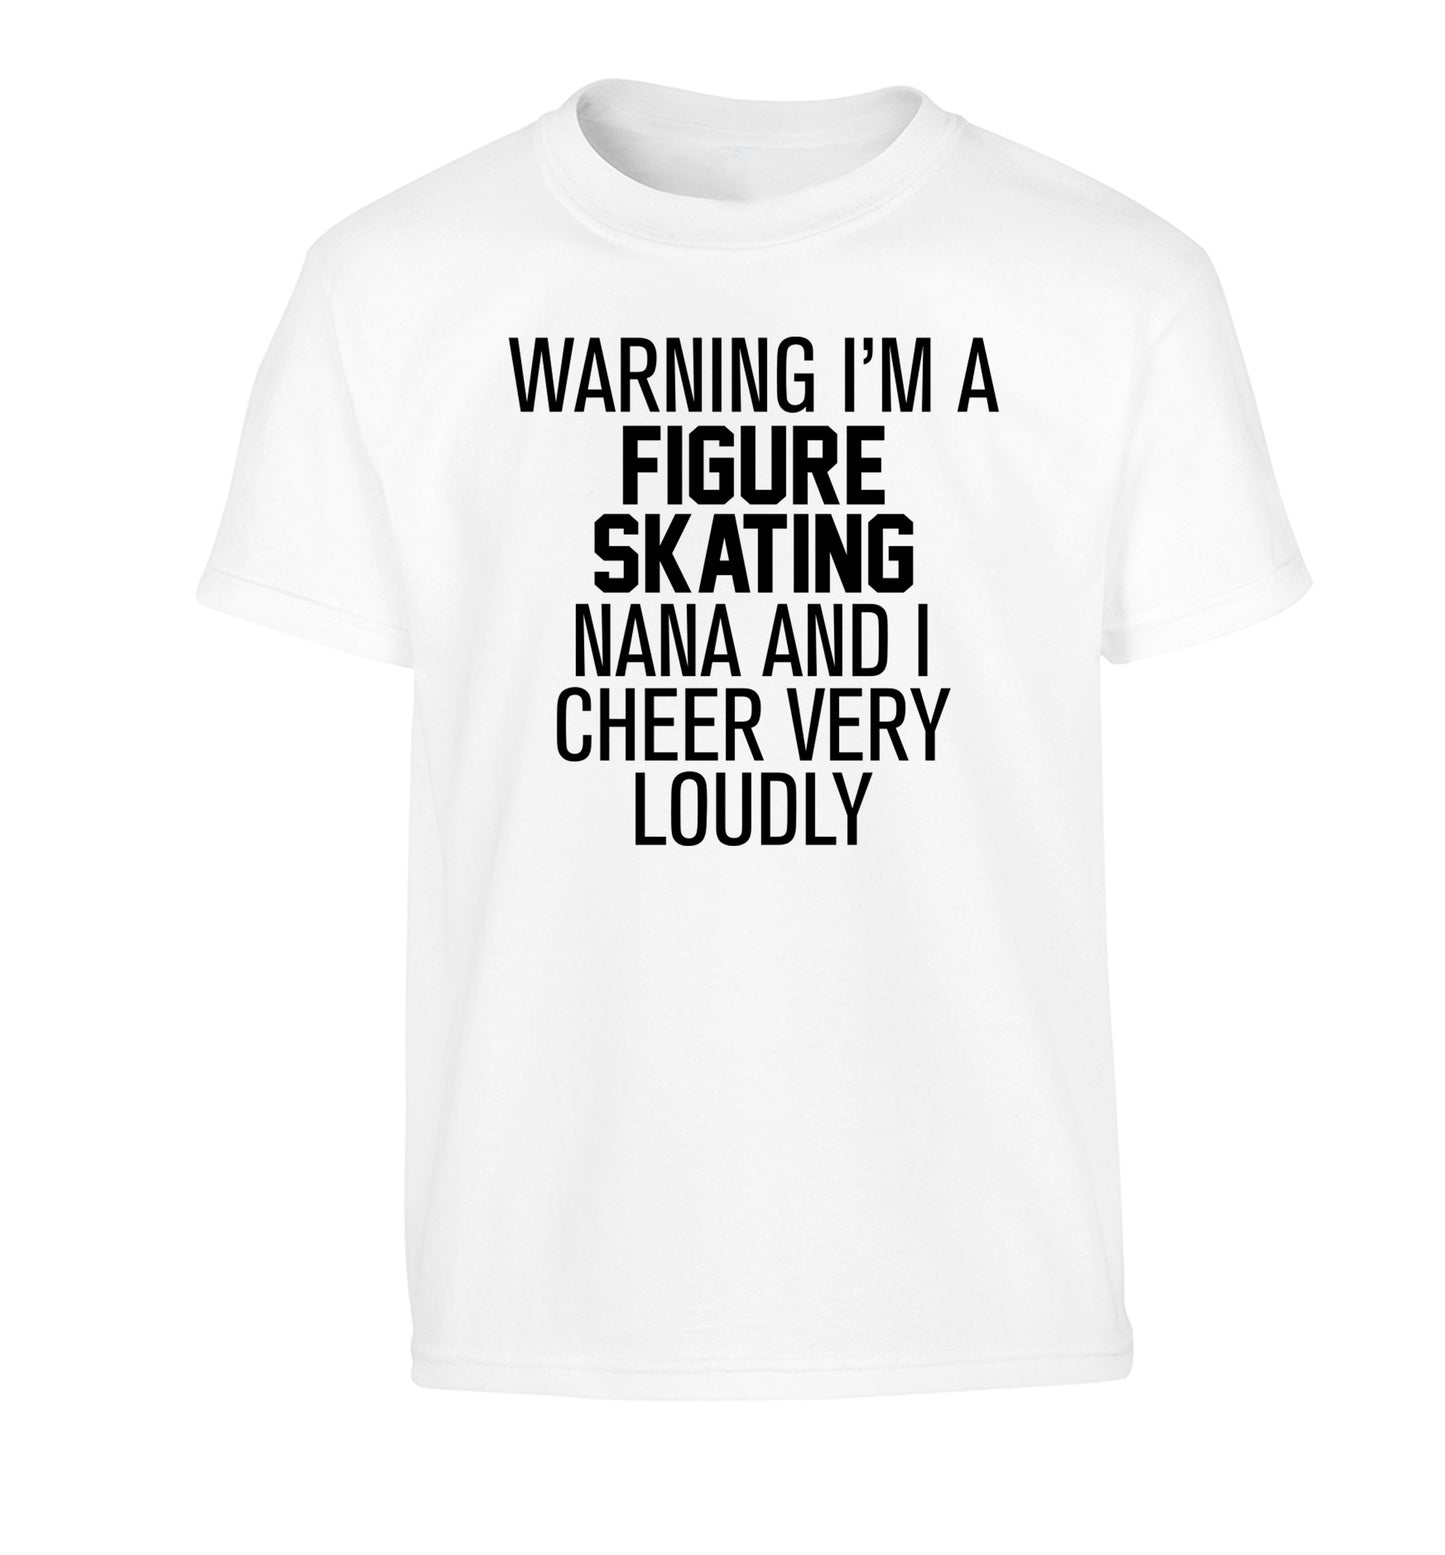 Warning I'm a figure skating nana and I cheer very loudly Children's white Tshirt 12-14 Years